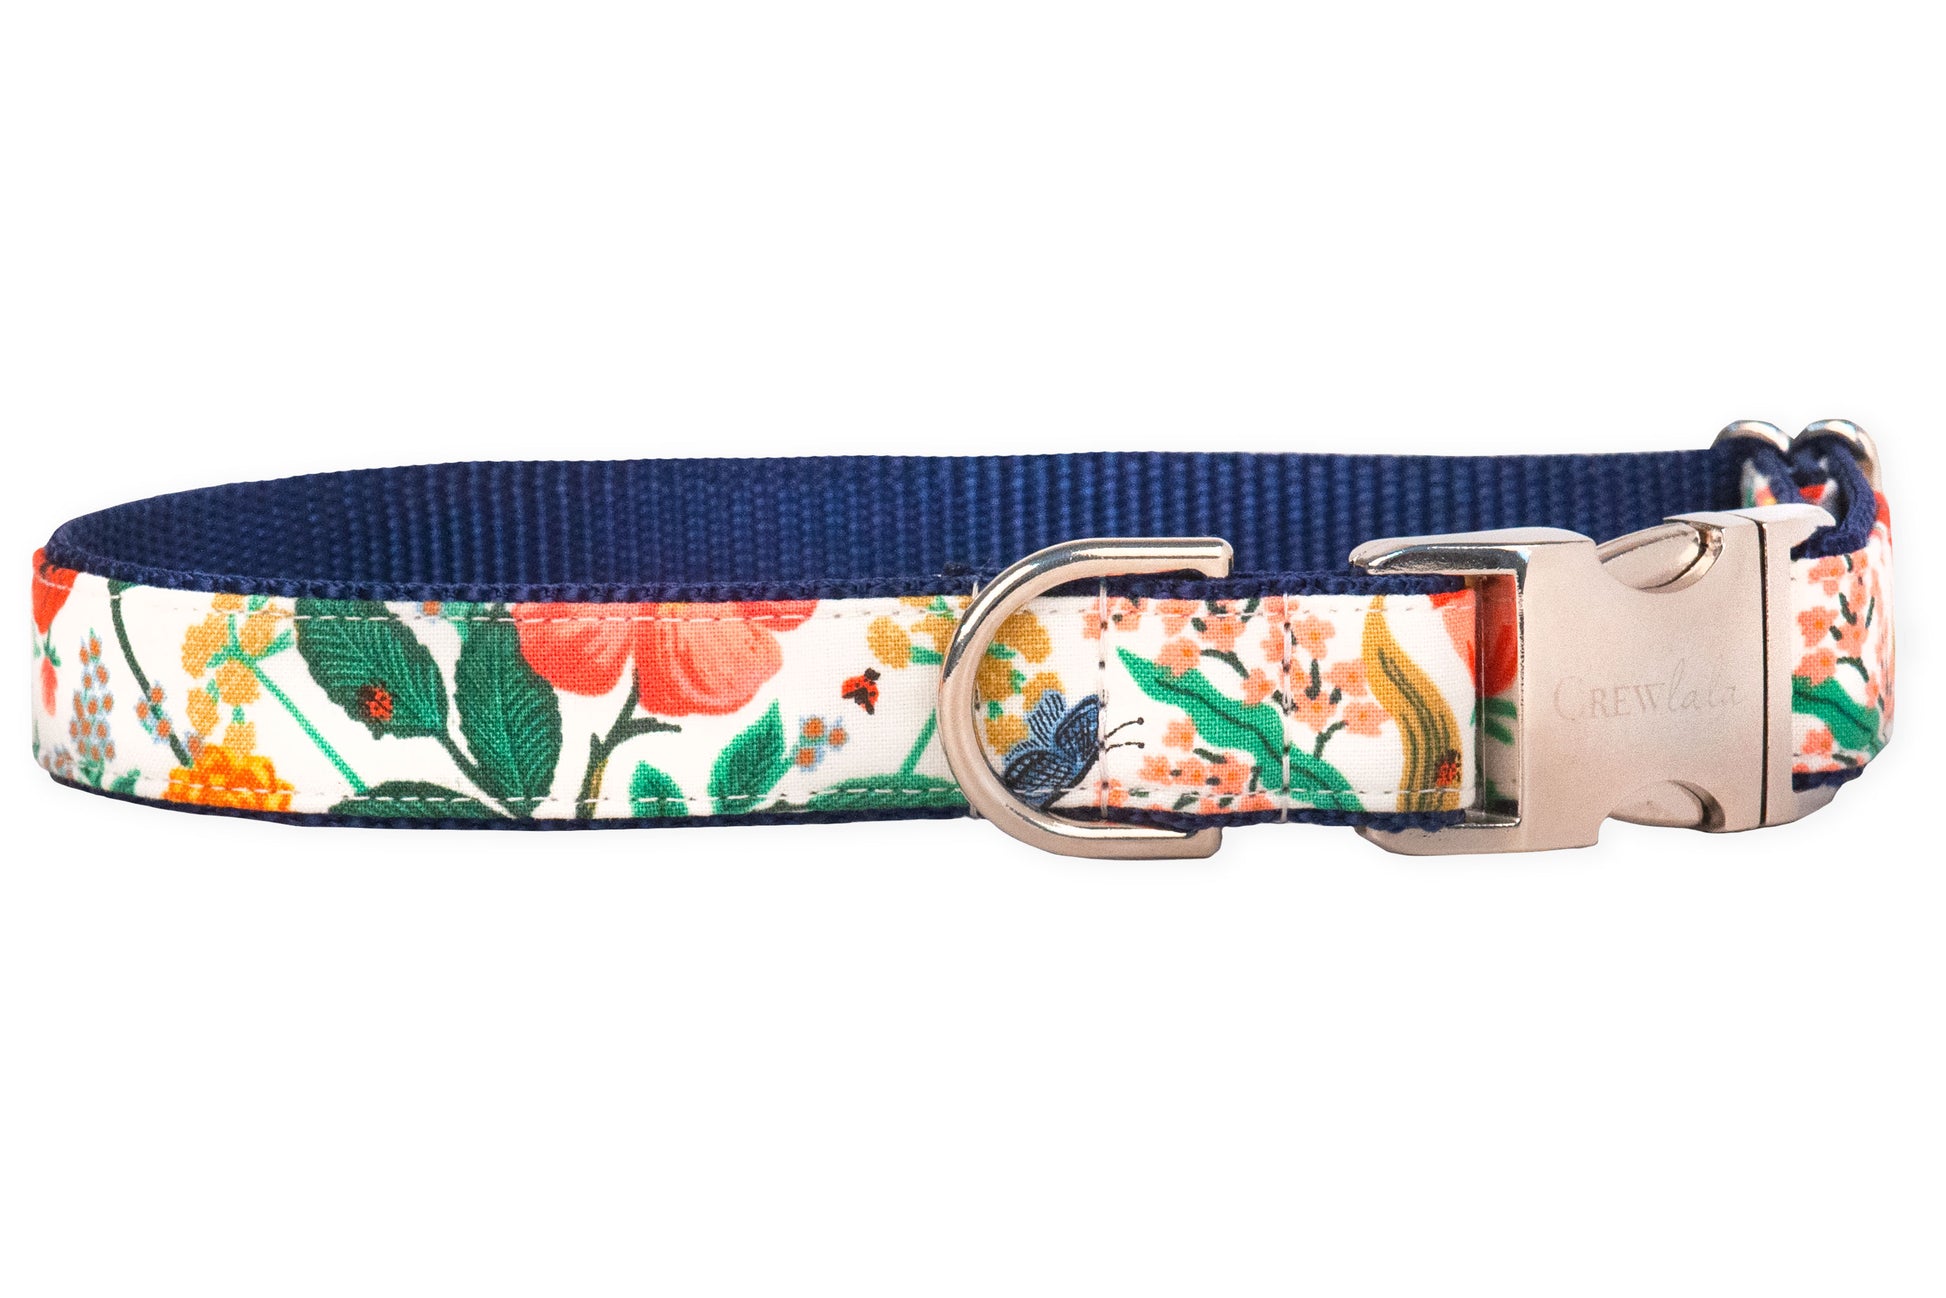 Poppy Gardens Bow Tie Dog Collar - Crew LaLa